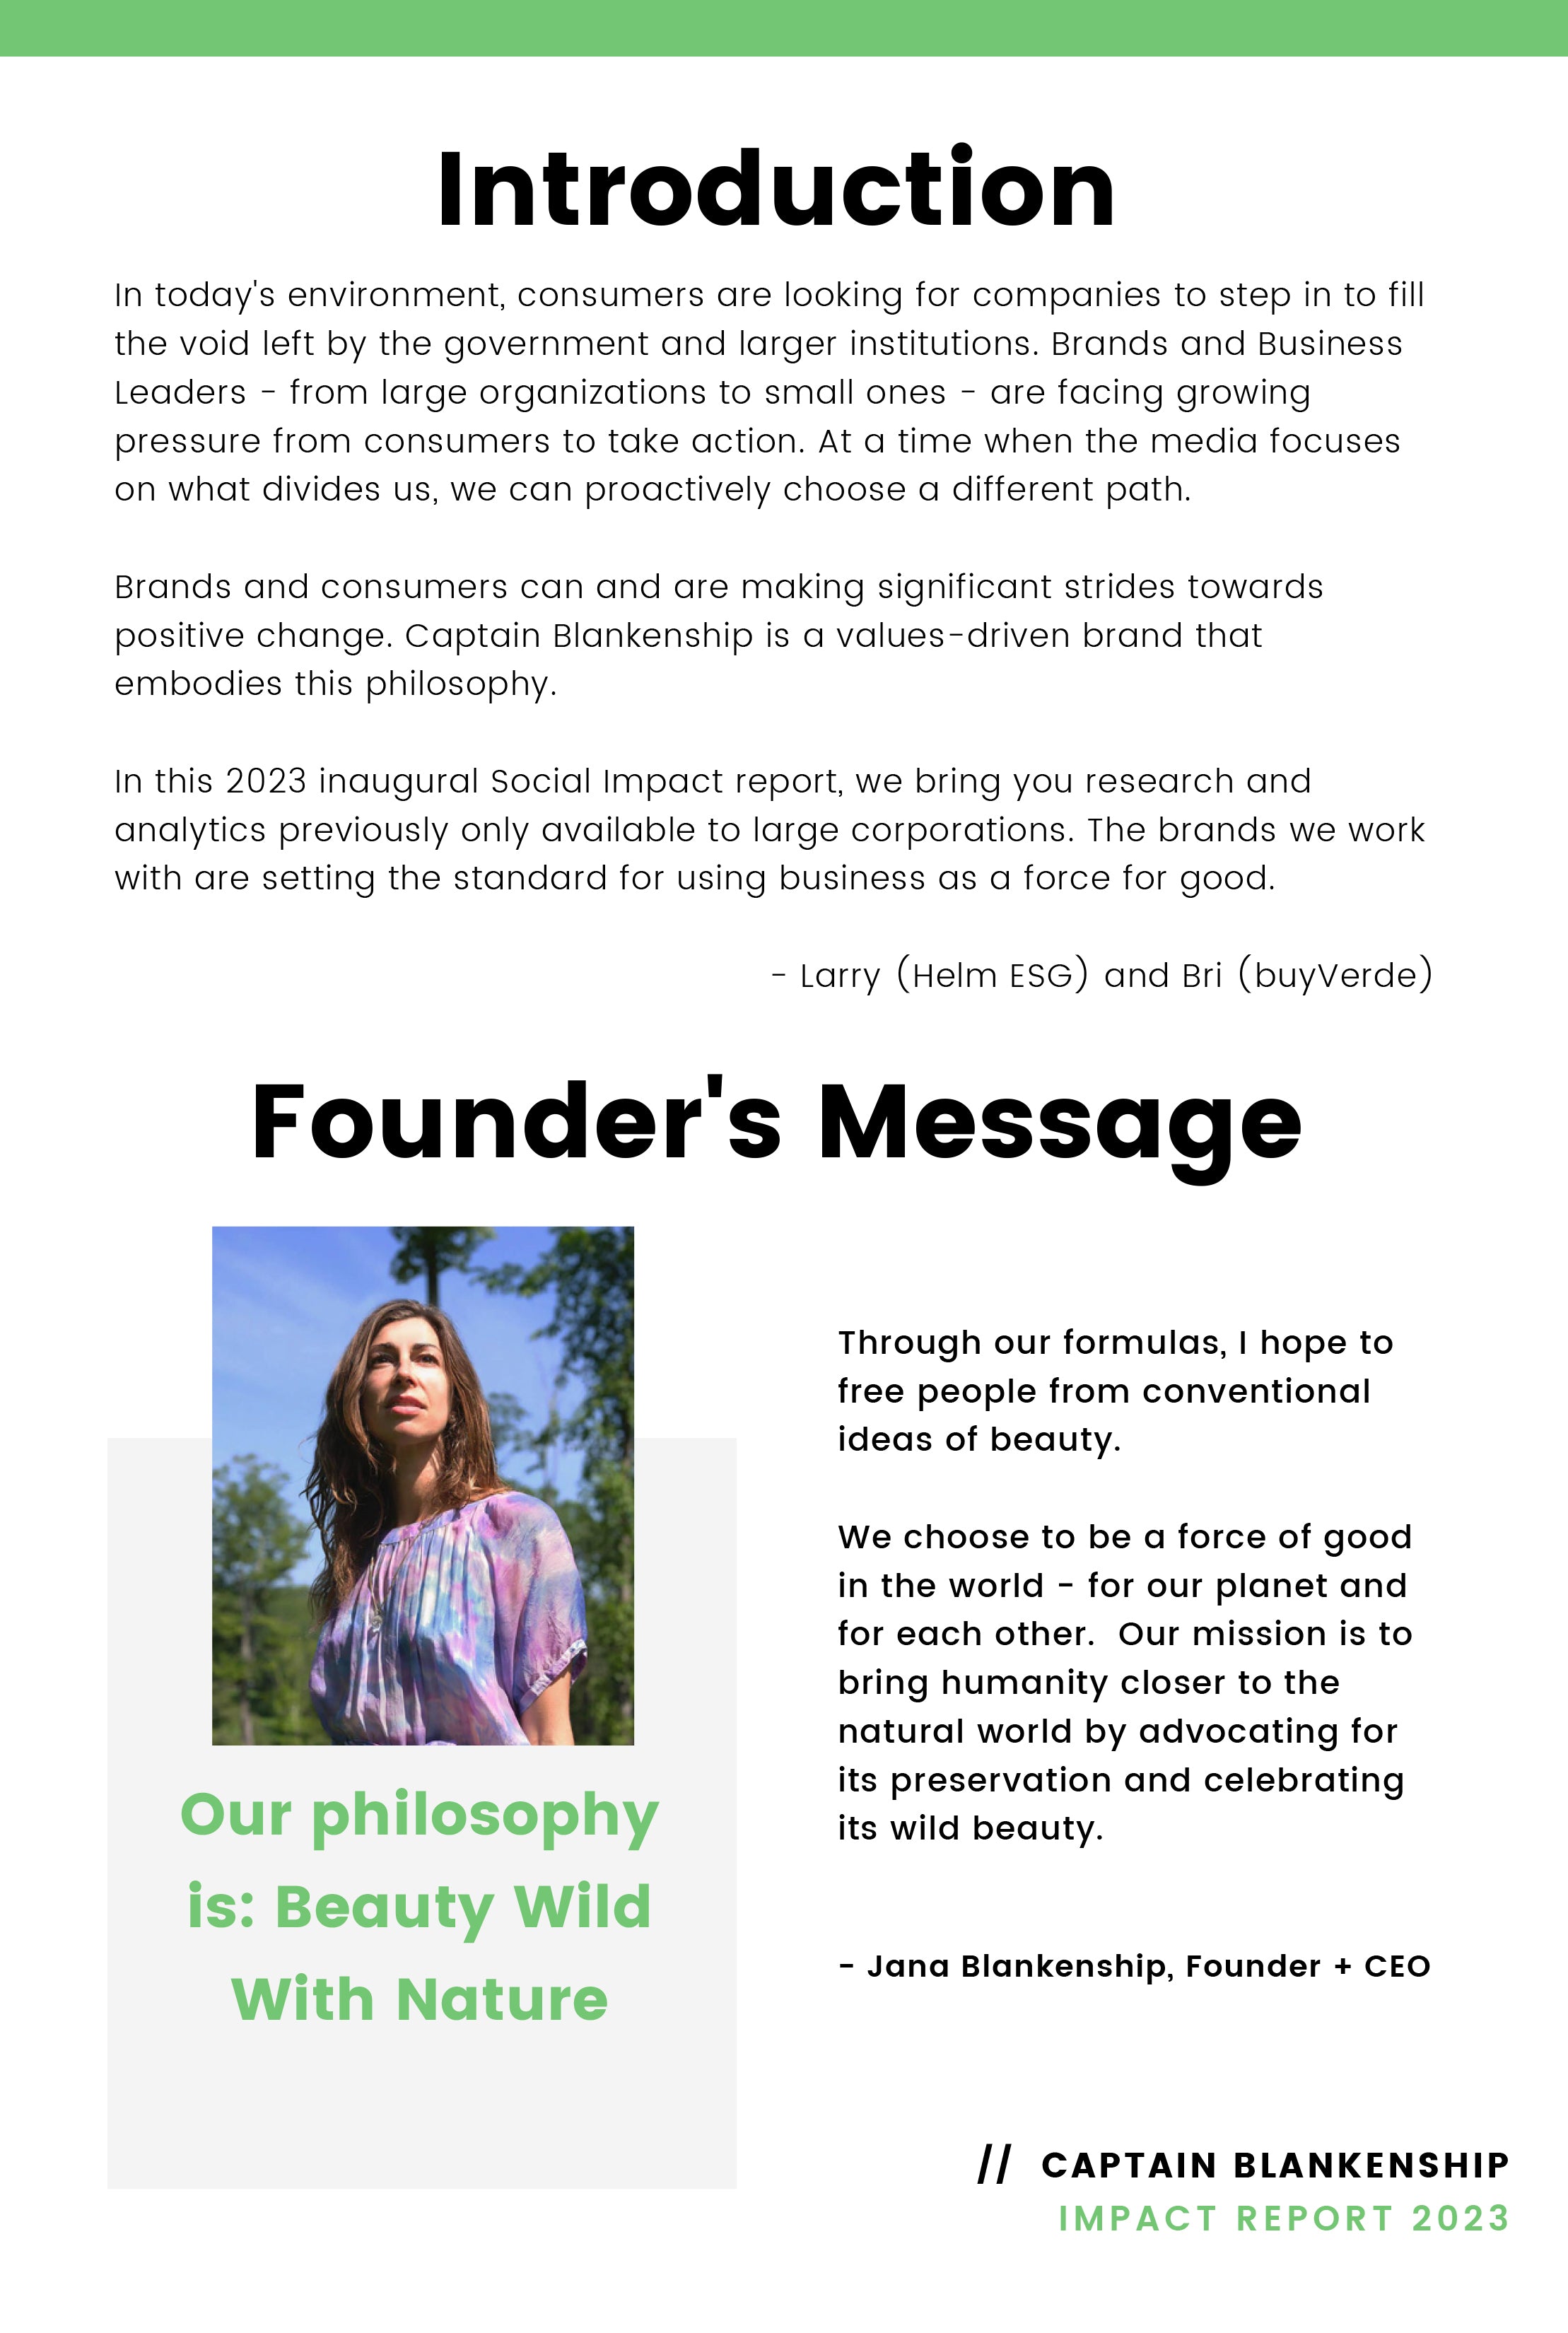 Founder's Message Impact Report Jana Blankenship